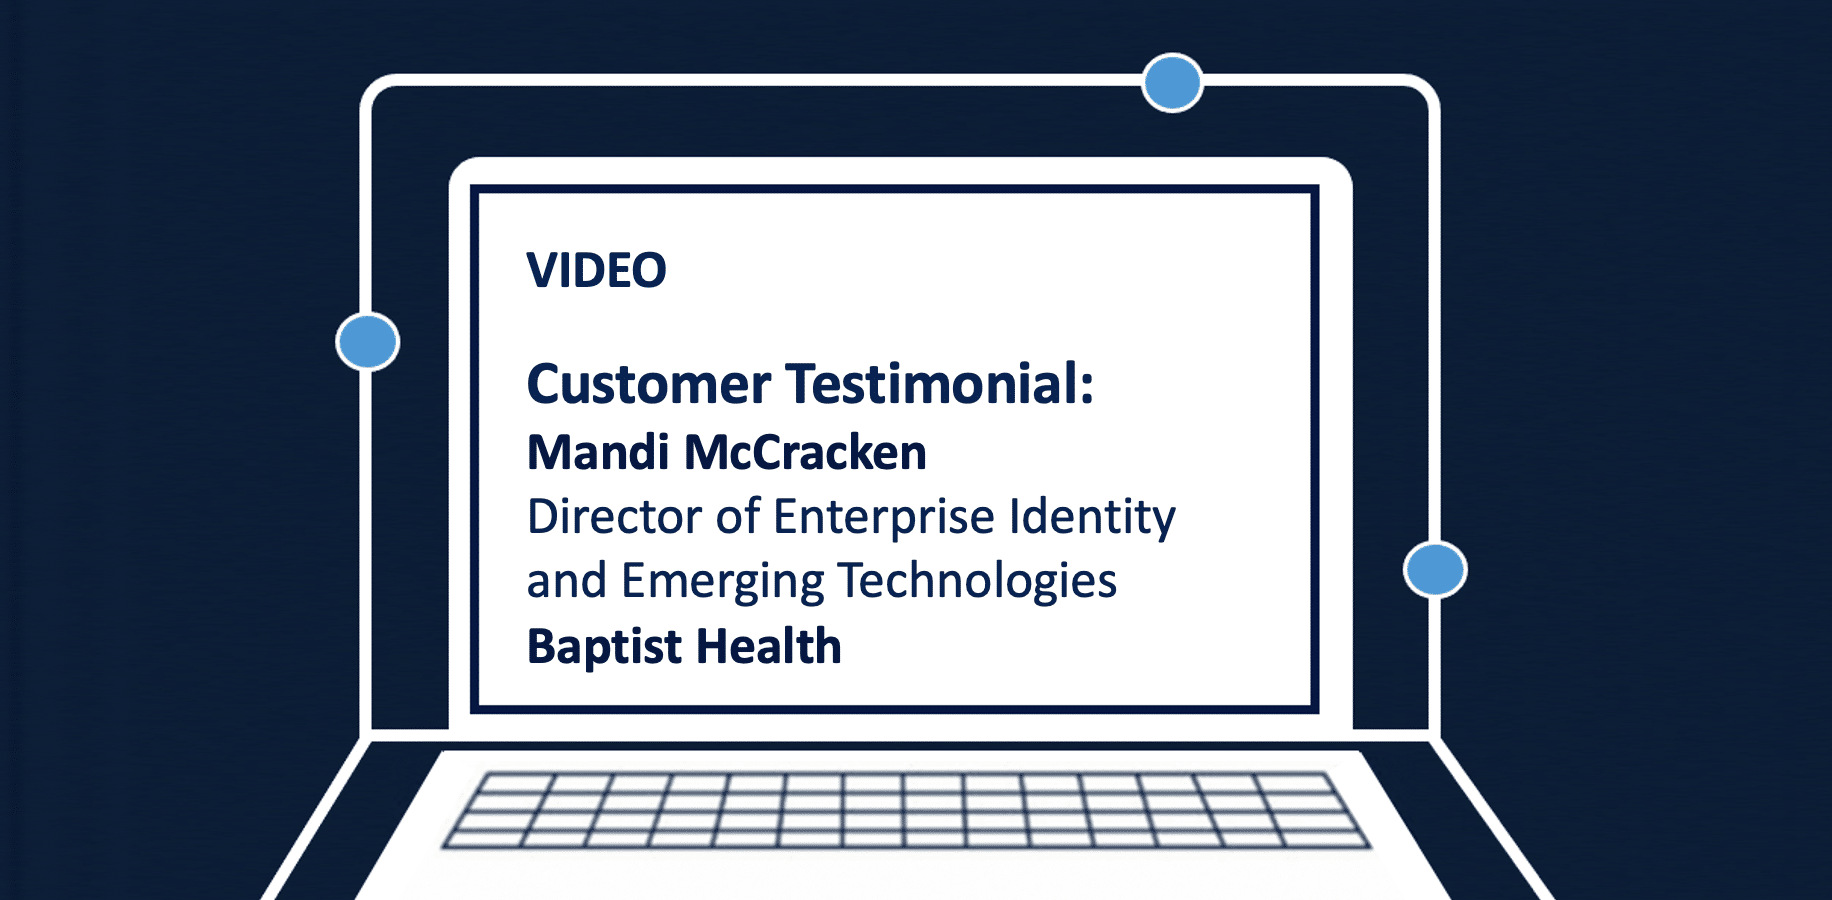 Customer Testimonial: Director of Enterprise Identity and Emerging Technologies Baptist Health